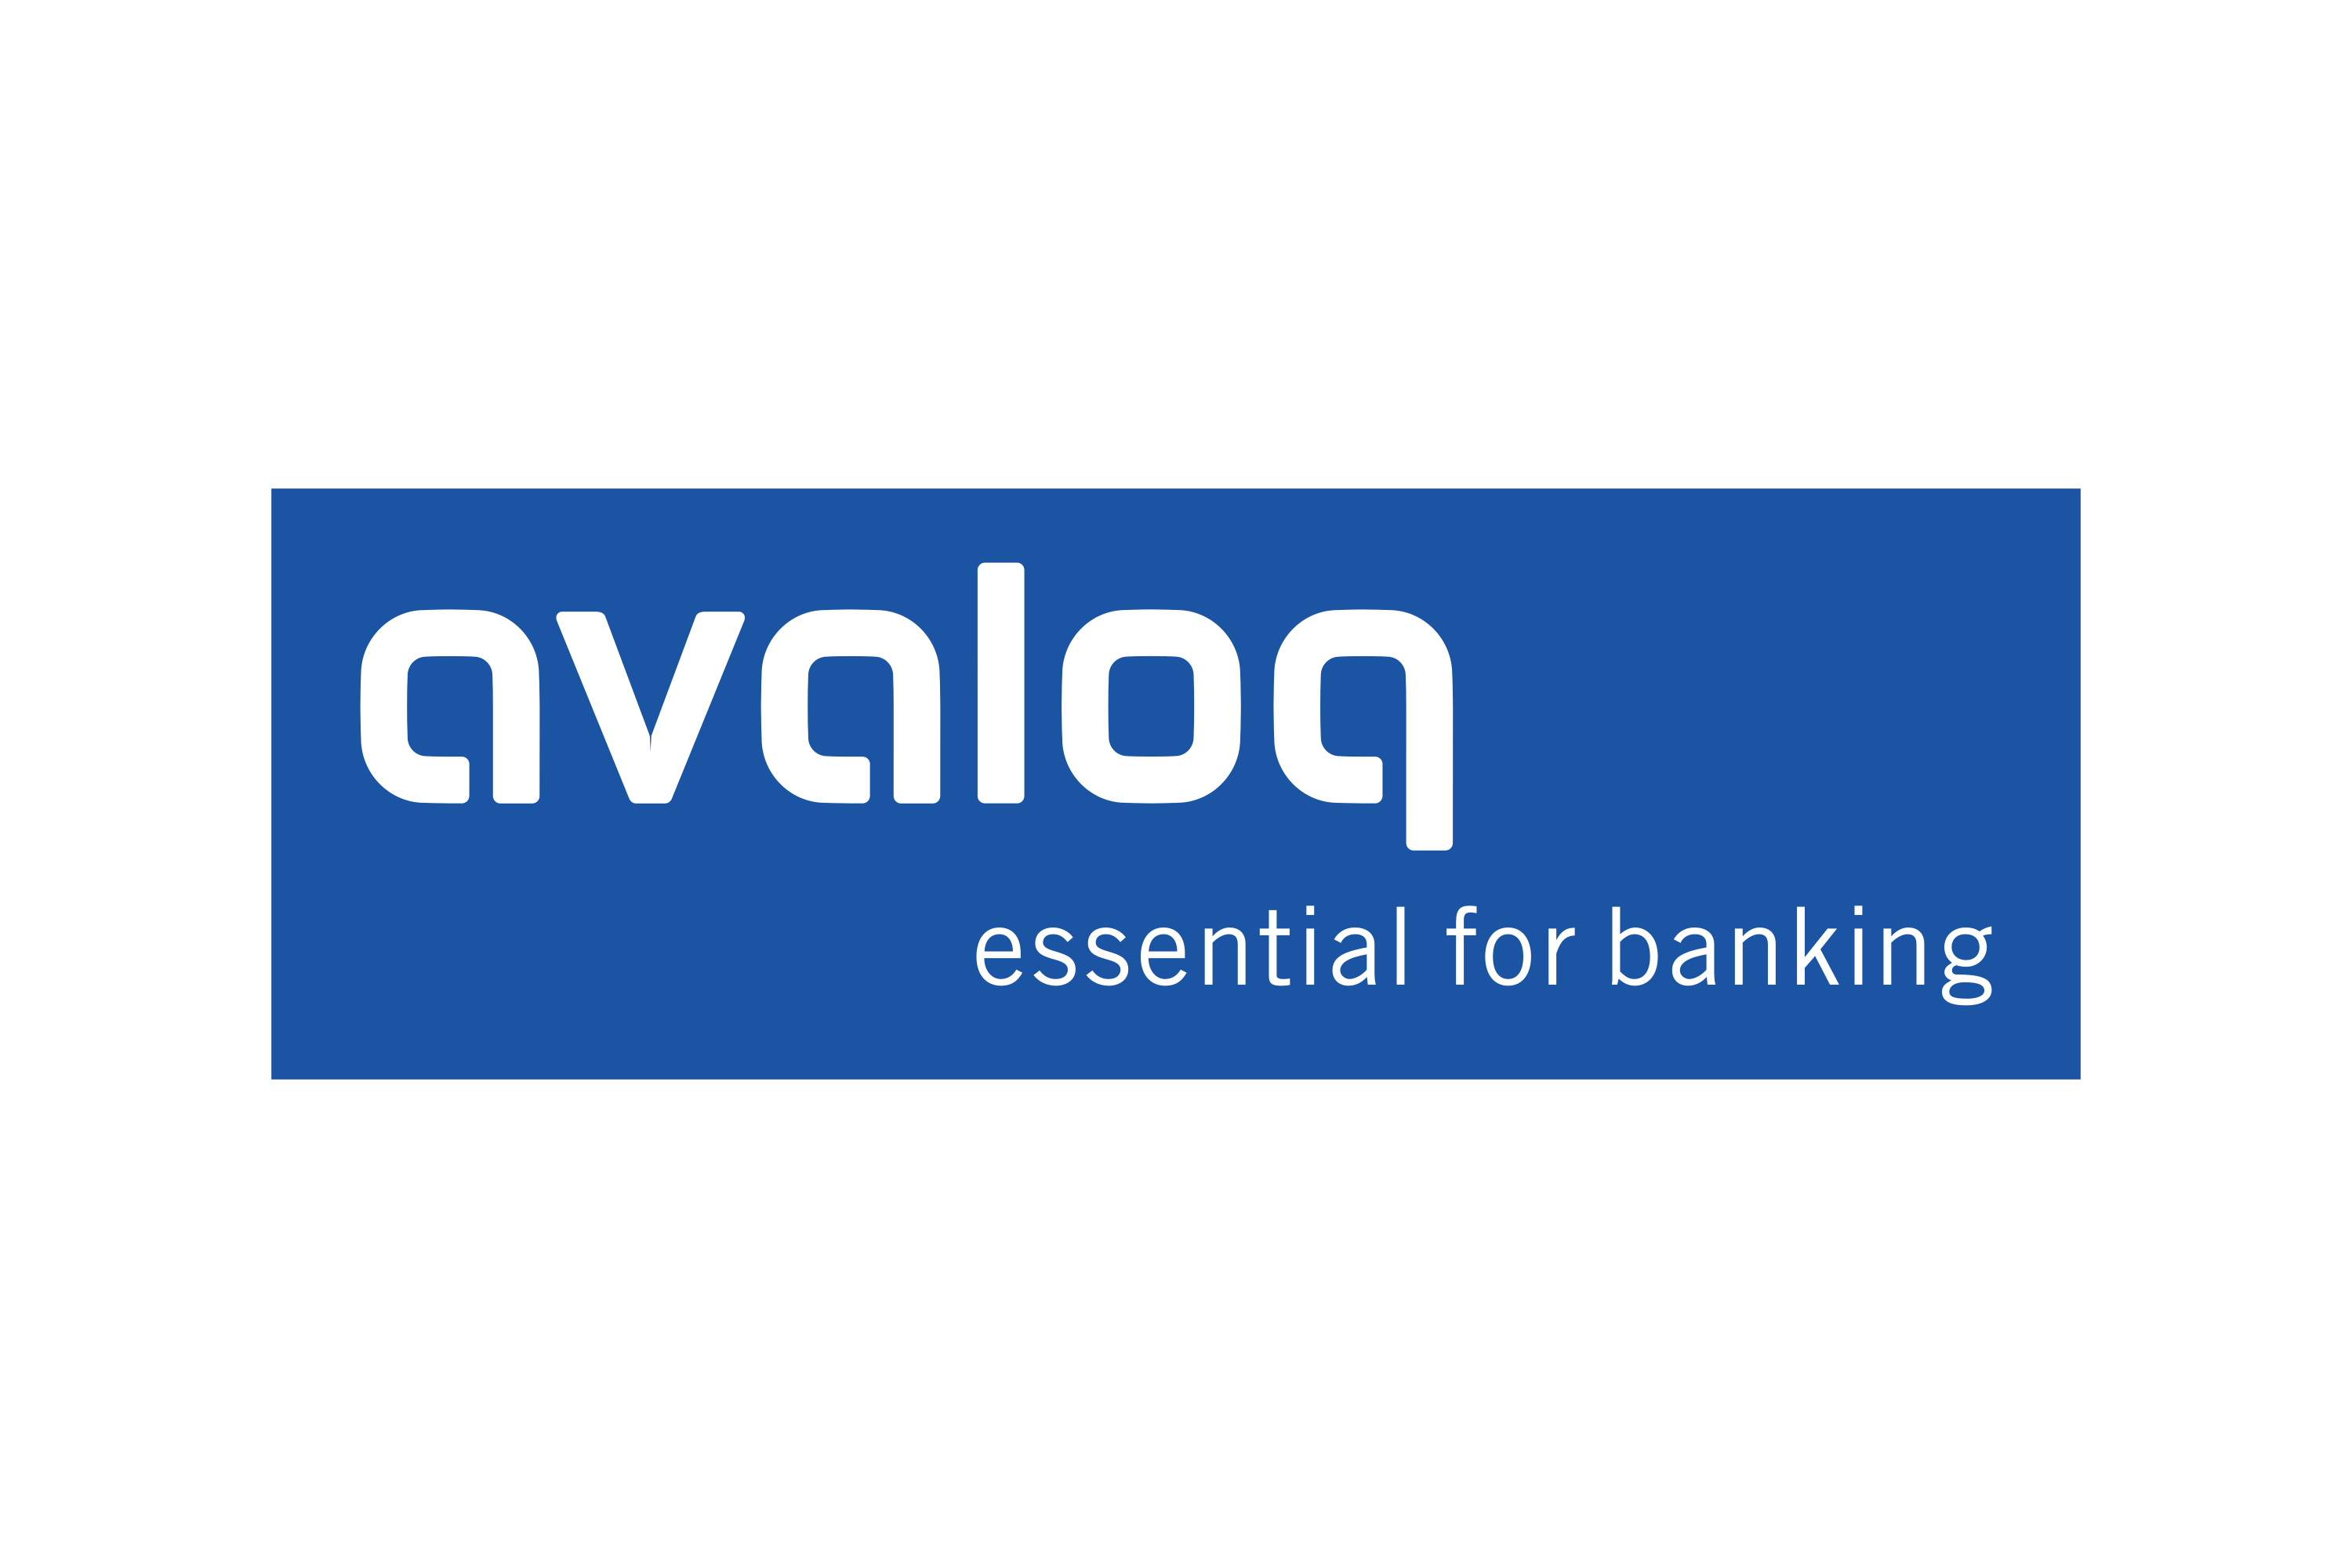 Avaloq Logo